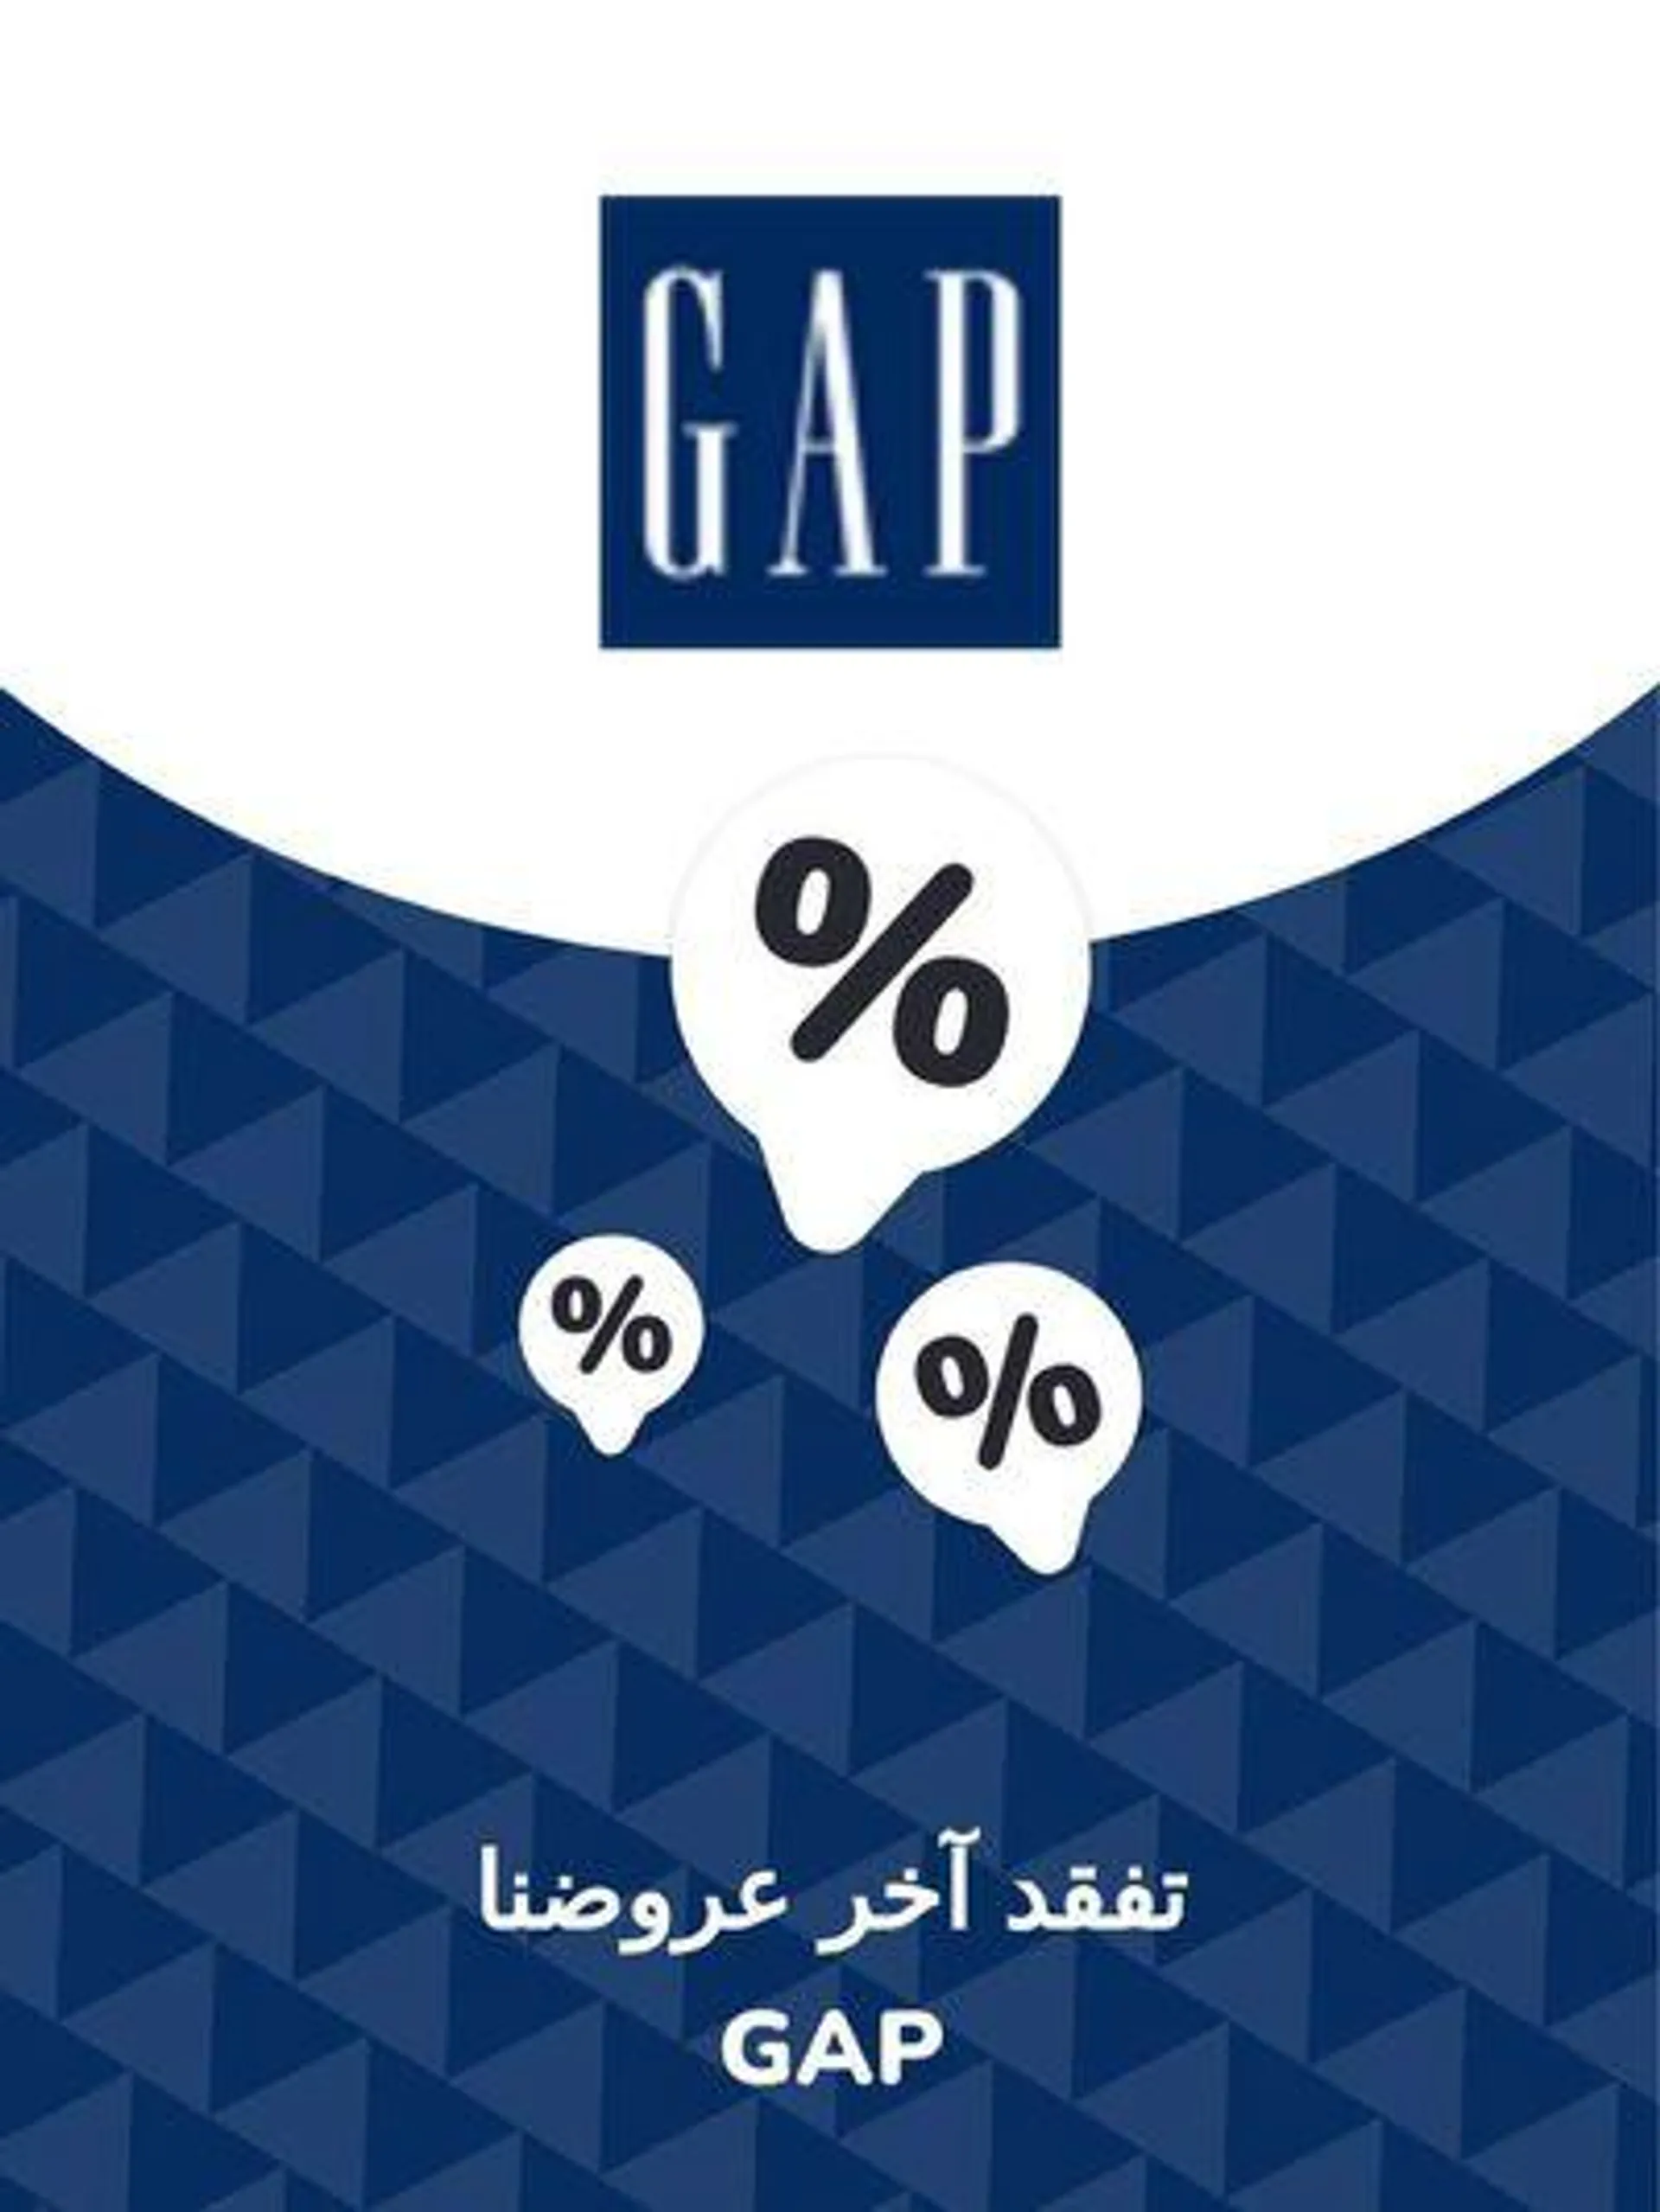 Offers Gap - 1